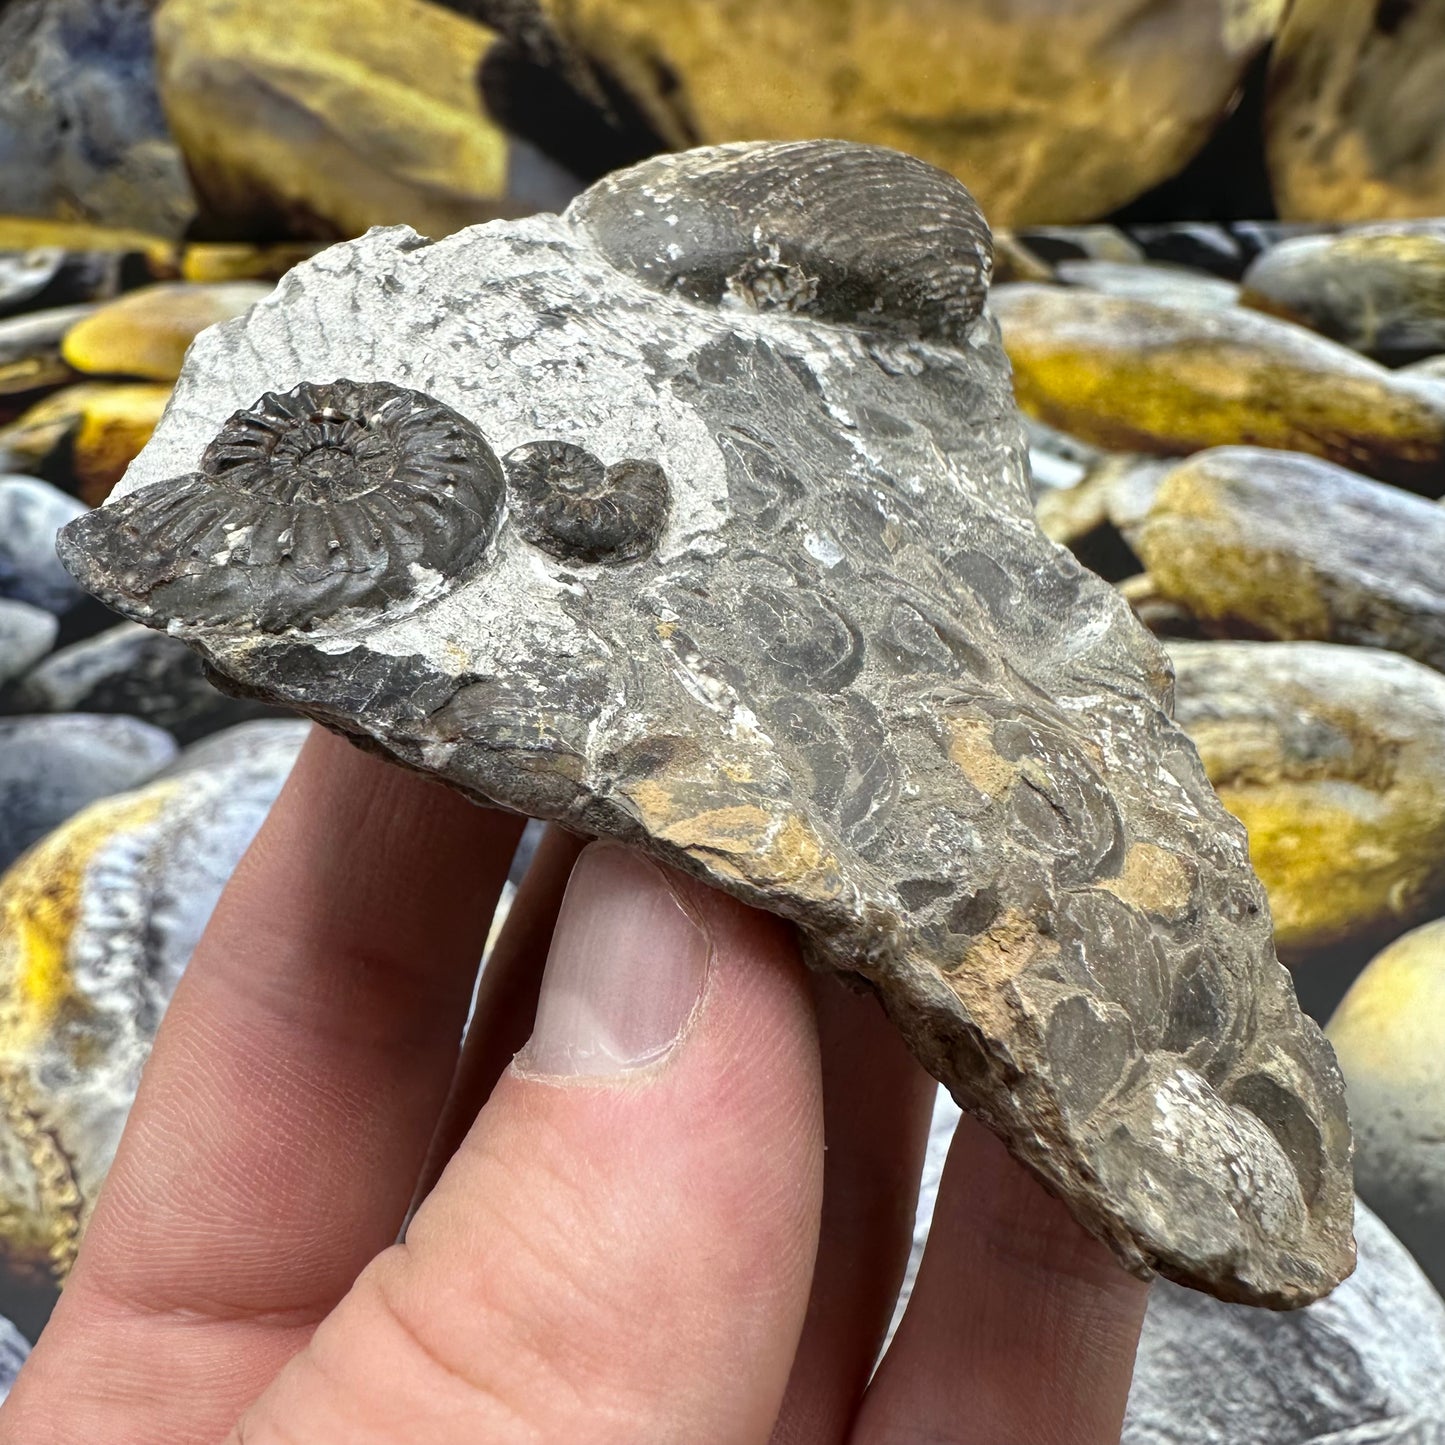 Amaltheus subnodosus ammonite fossil - Whitby, North Yorkshire